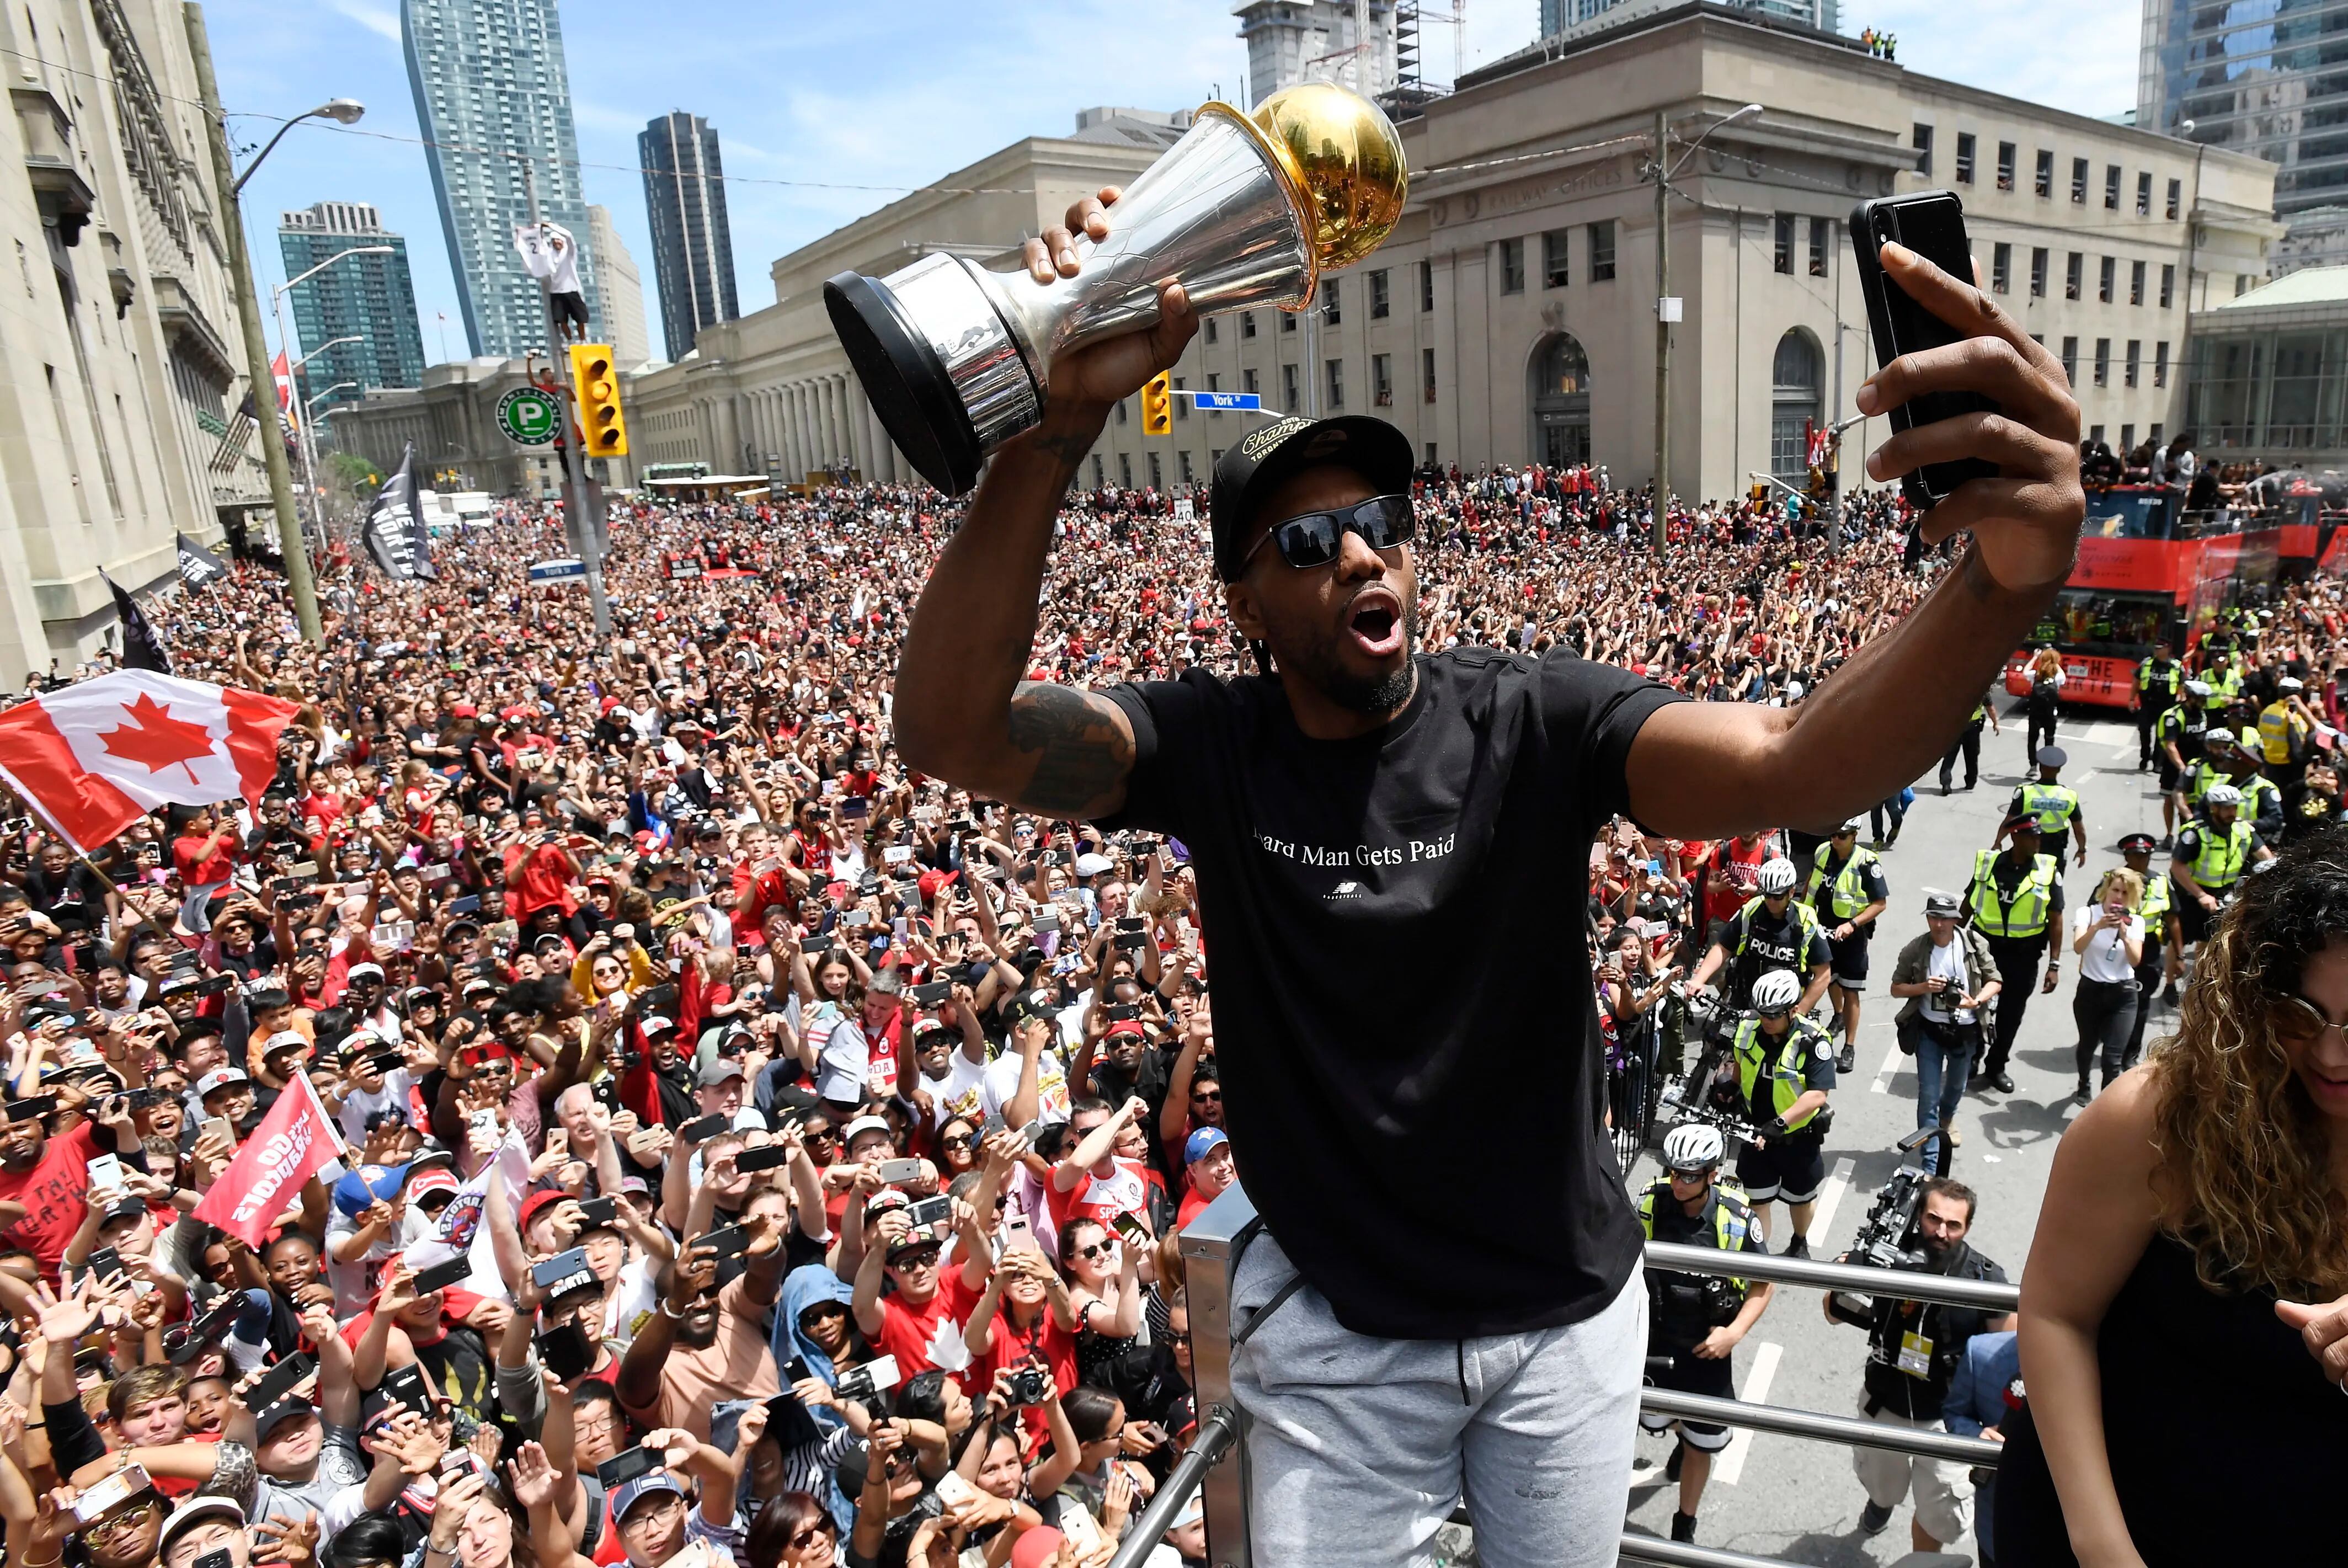 Kawhi Leonard of the Toronto Raptors wins NBA Finals MVP award